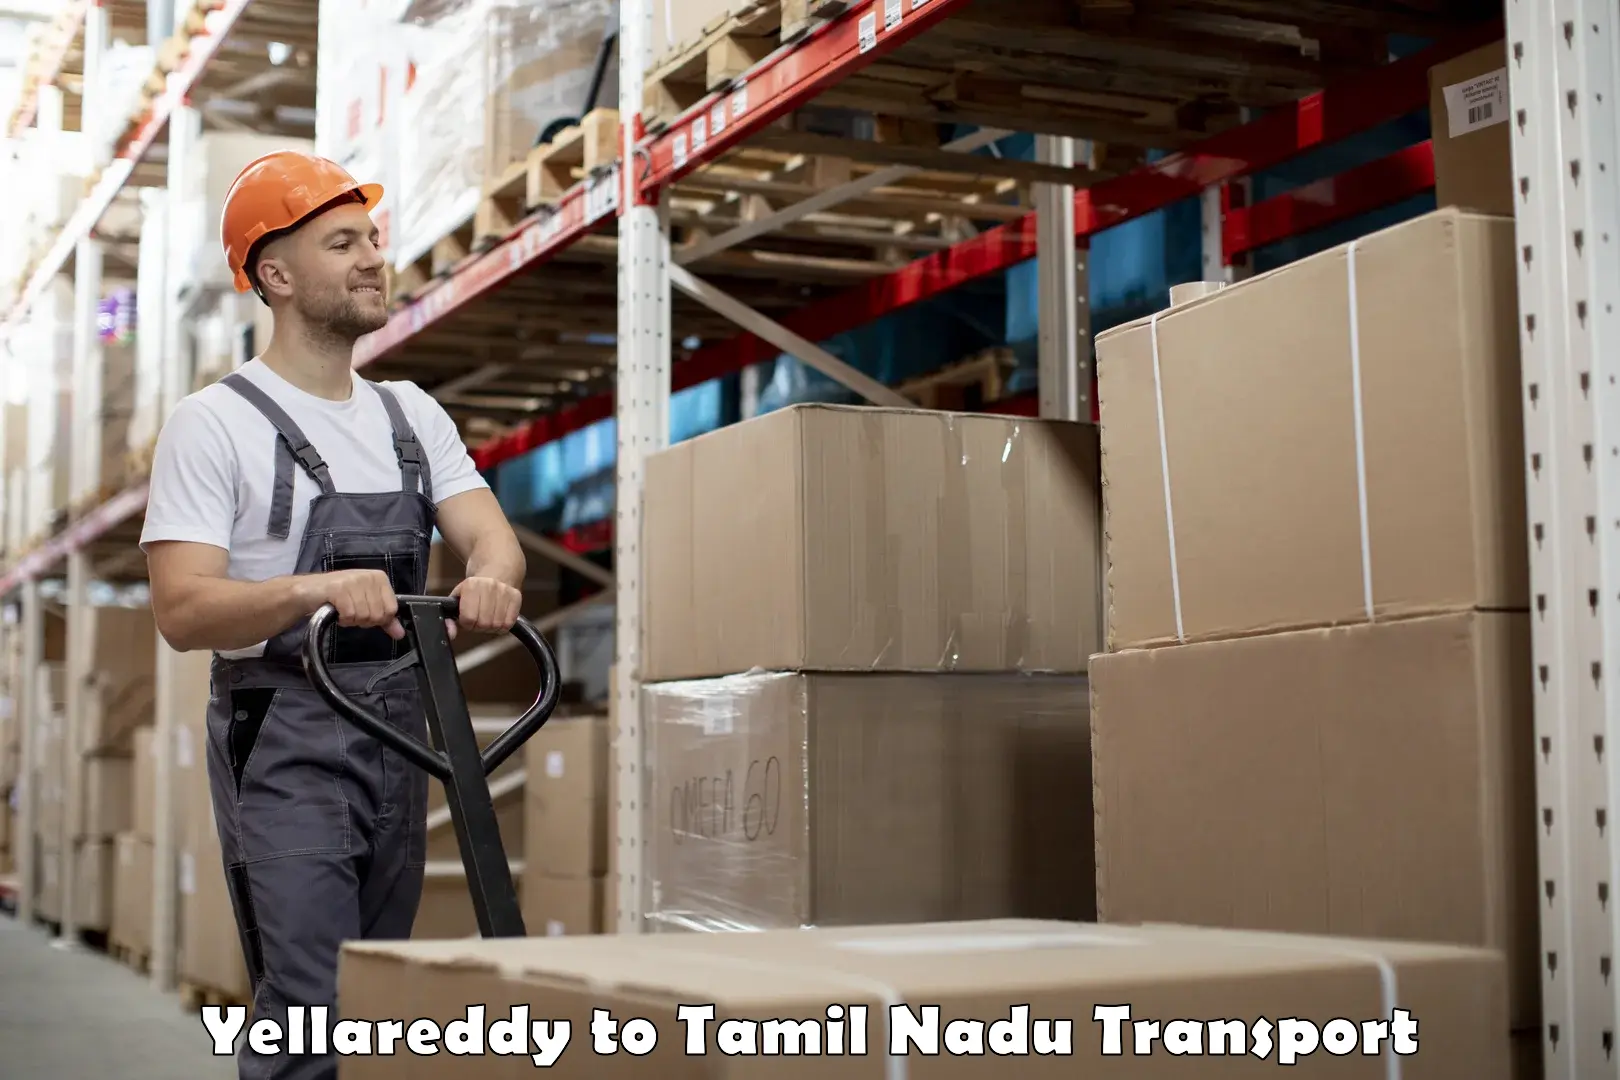 Lorry transport service Yellareddy to Tamil Nadu